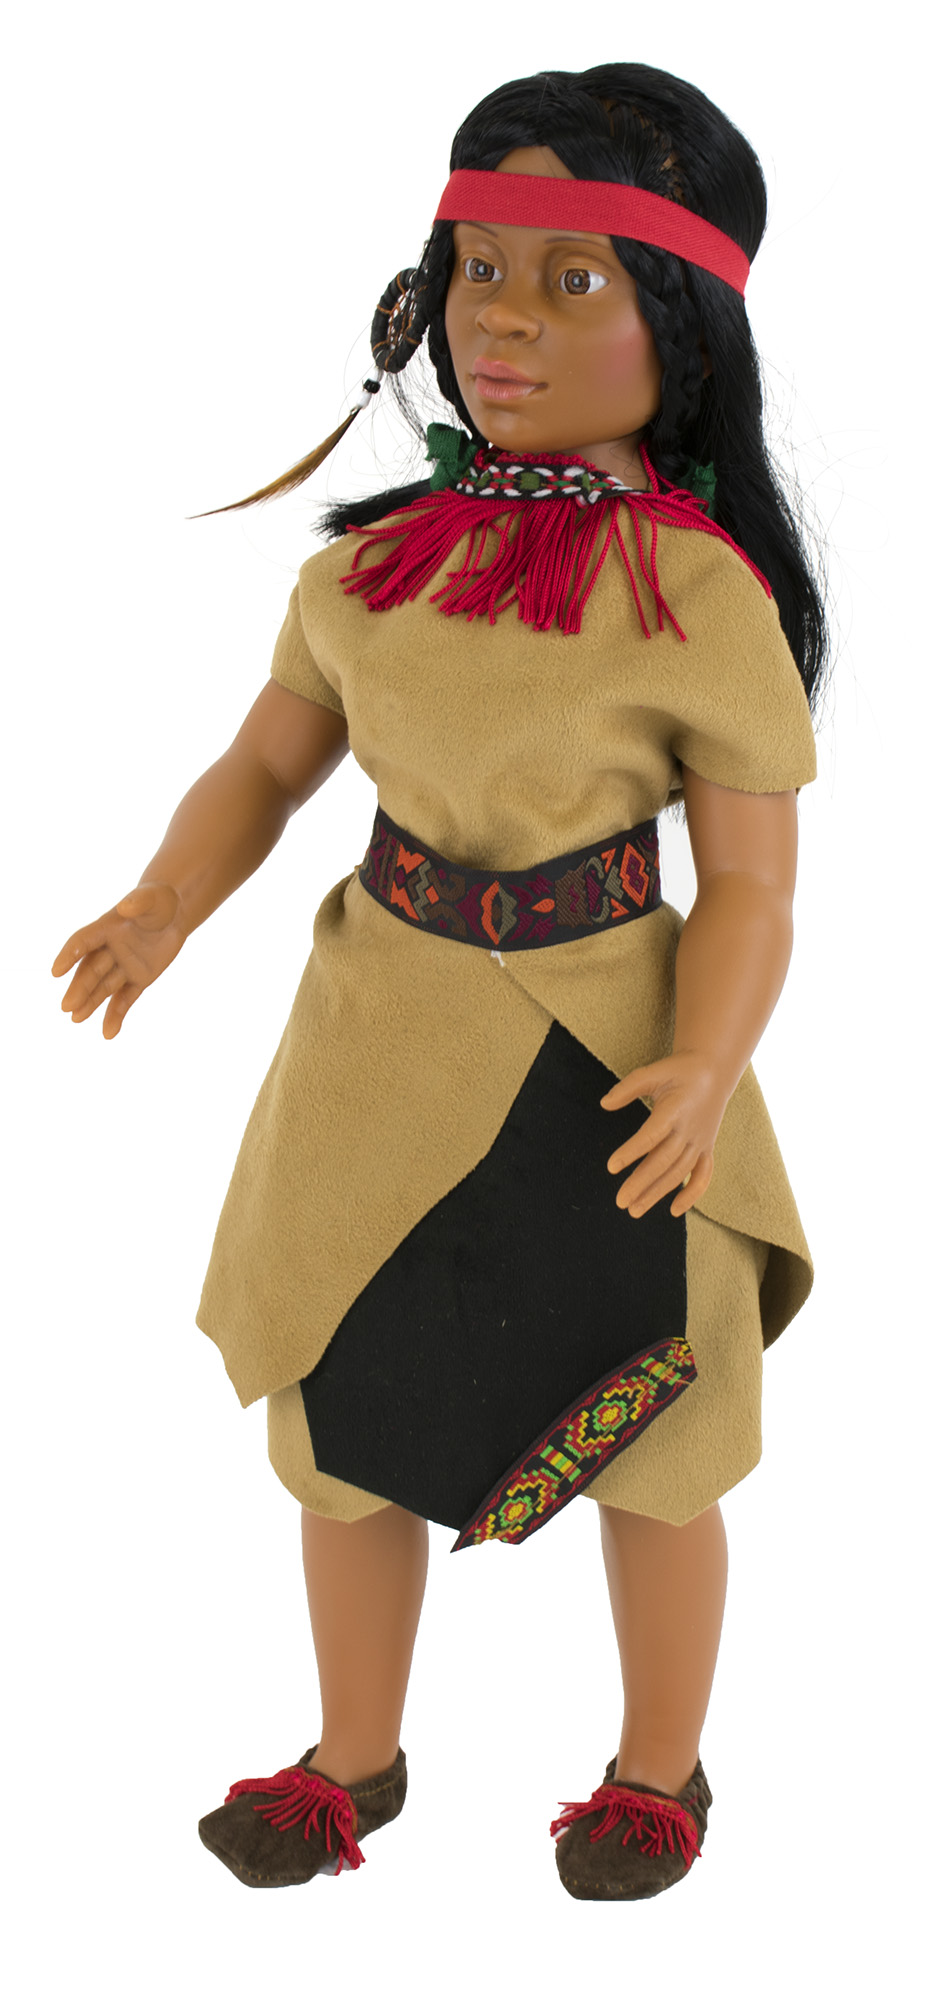 Кукла Lamagik Индианка Tribu Hupa 40105, 41 см кукла lamagik индианка tribu hupa 40105 41 см